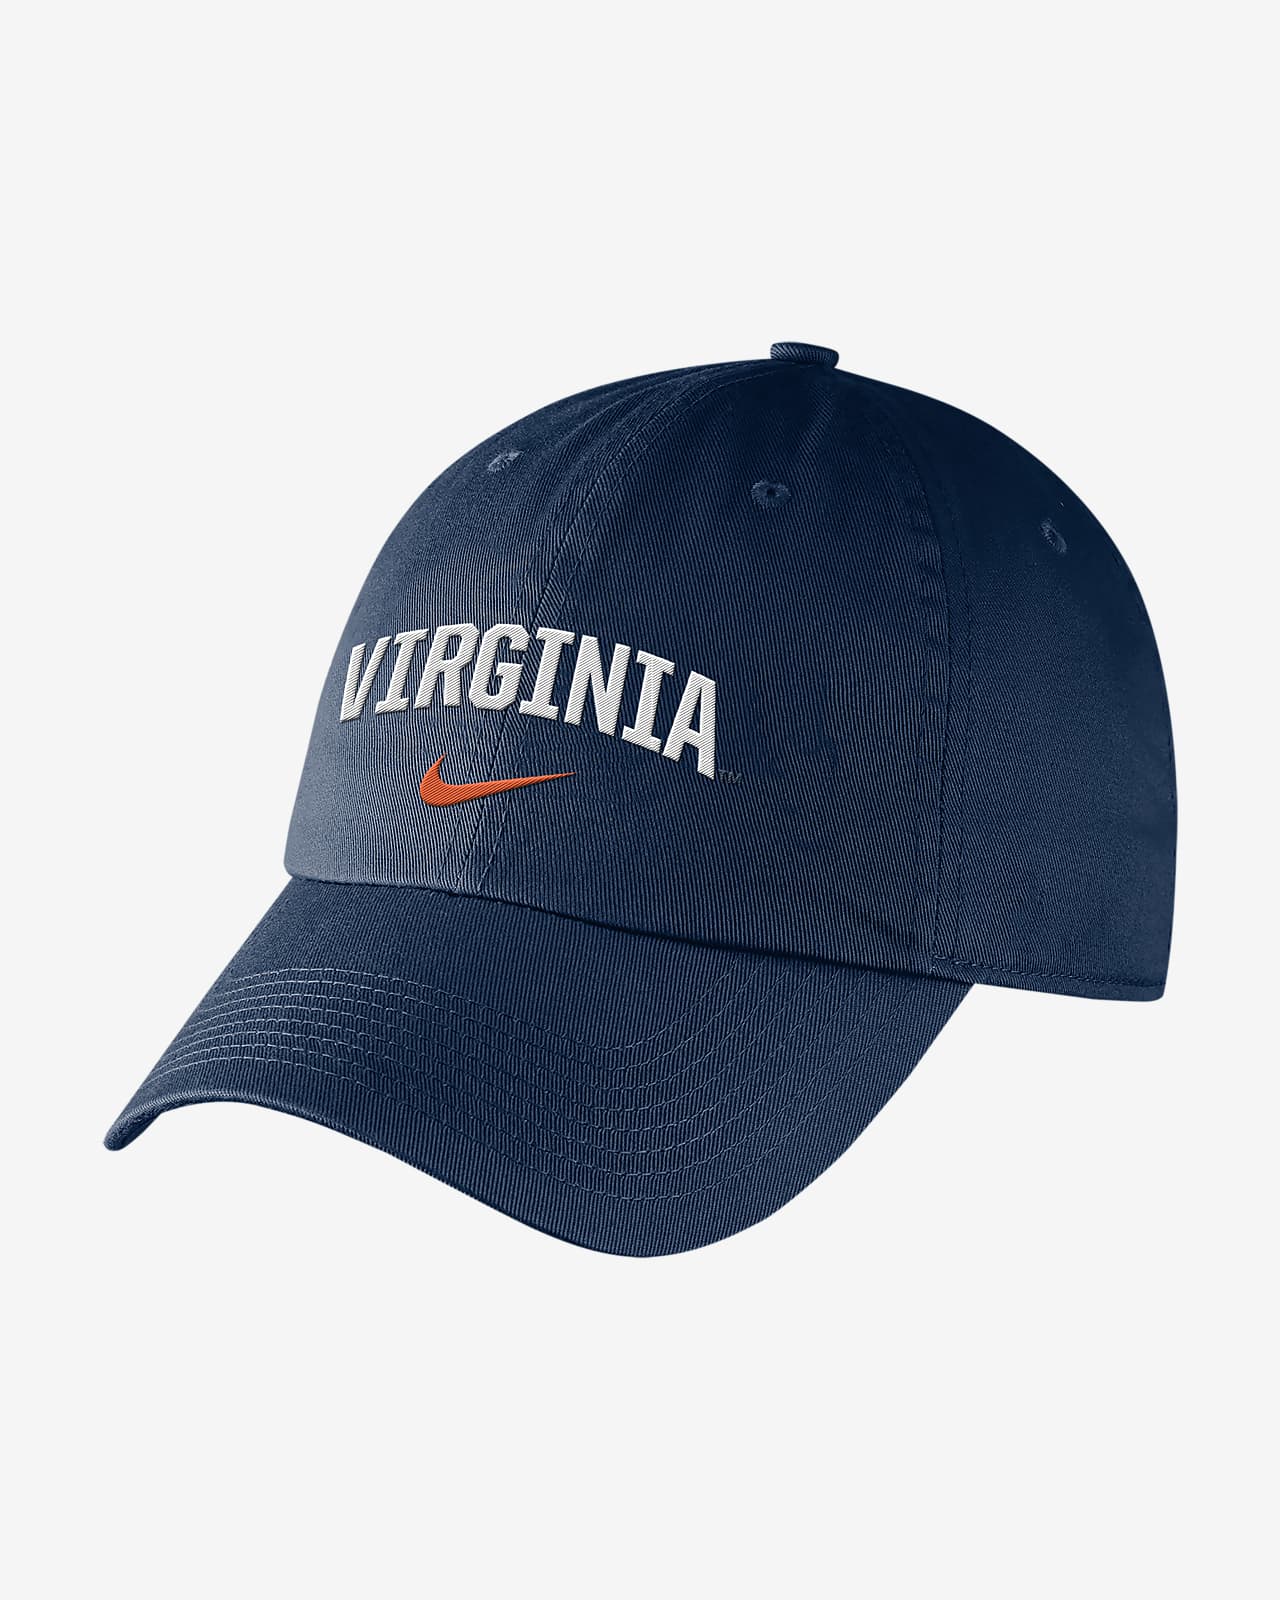 Nike College (Virginia) Hat